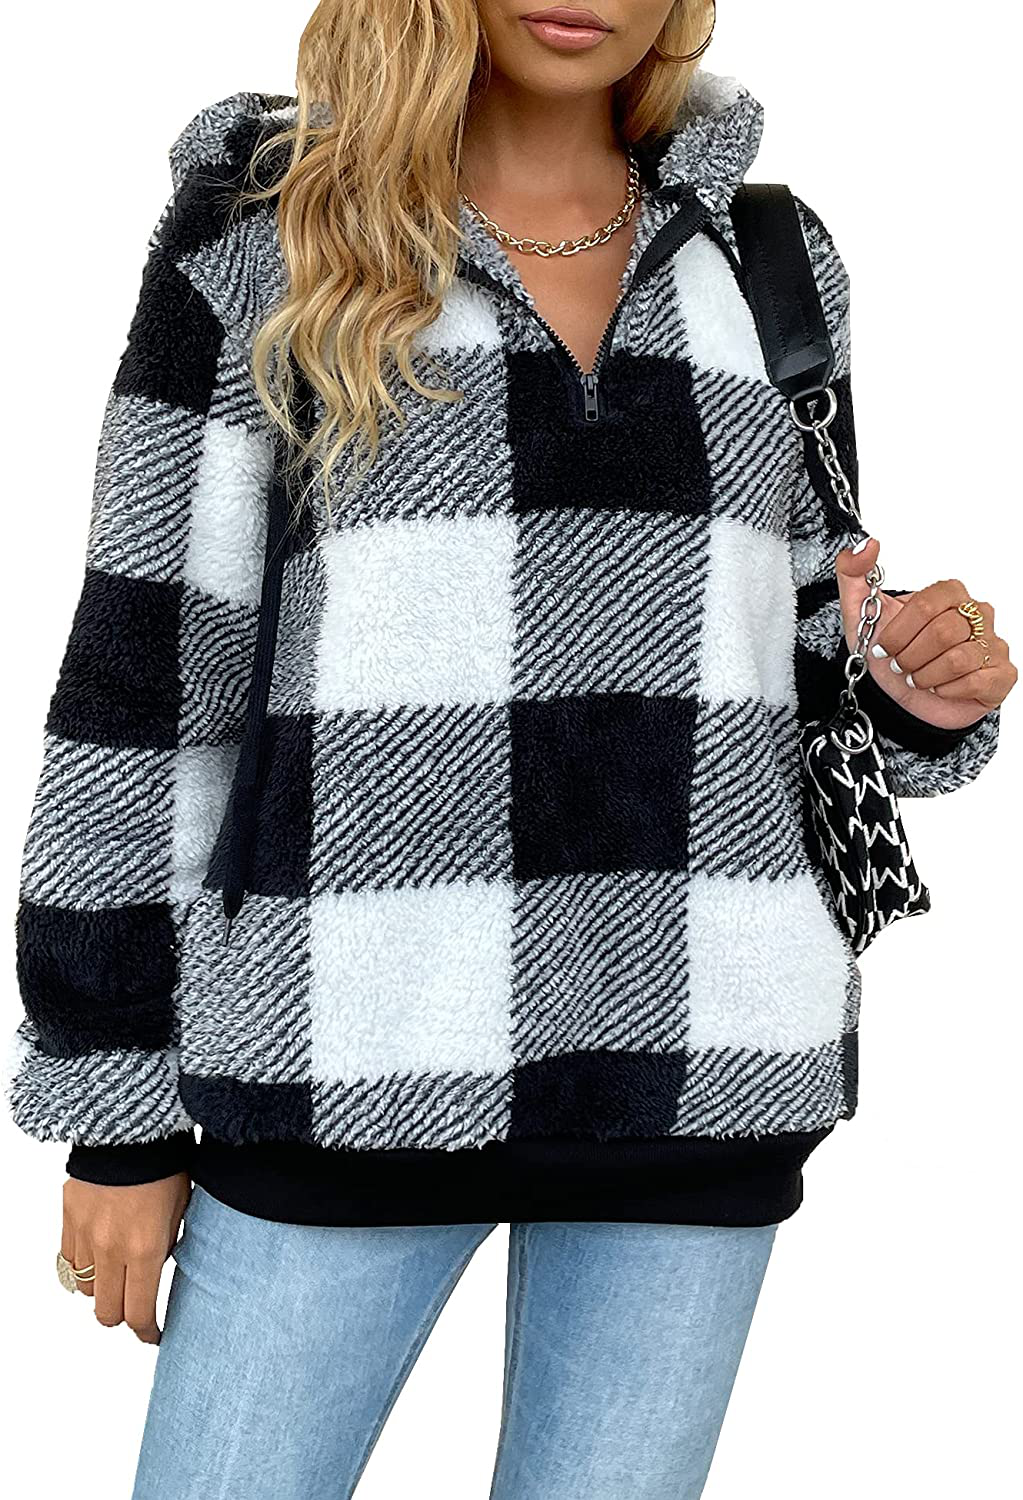 Women's Ultra Soft 1/4 Zip Fleece Jackets Oversized Casual Lightweight Active Pullover Hoodie Sweatshirt with Pockets